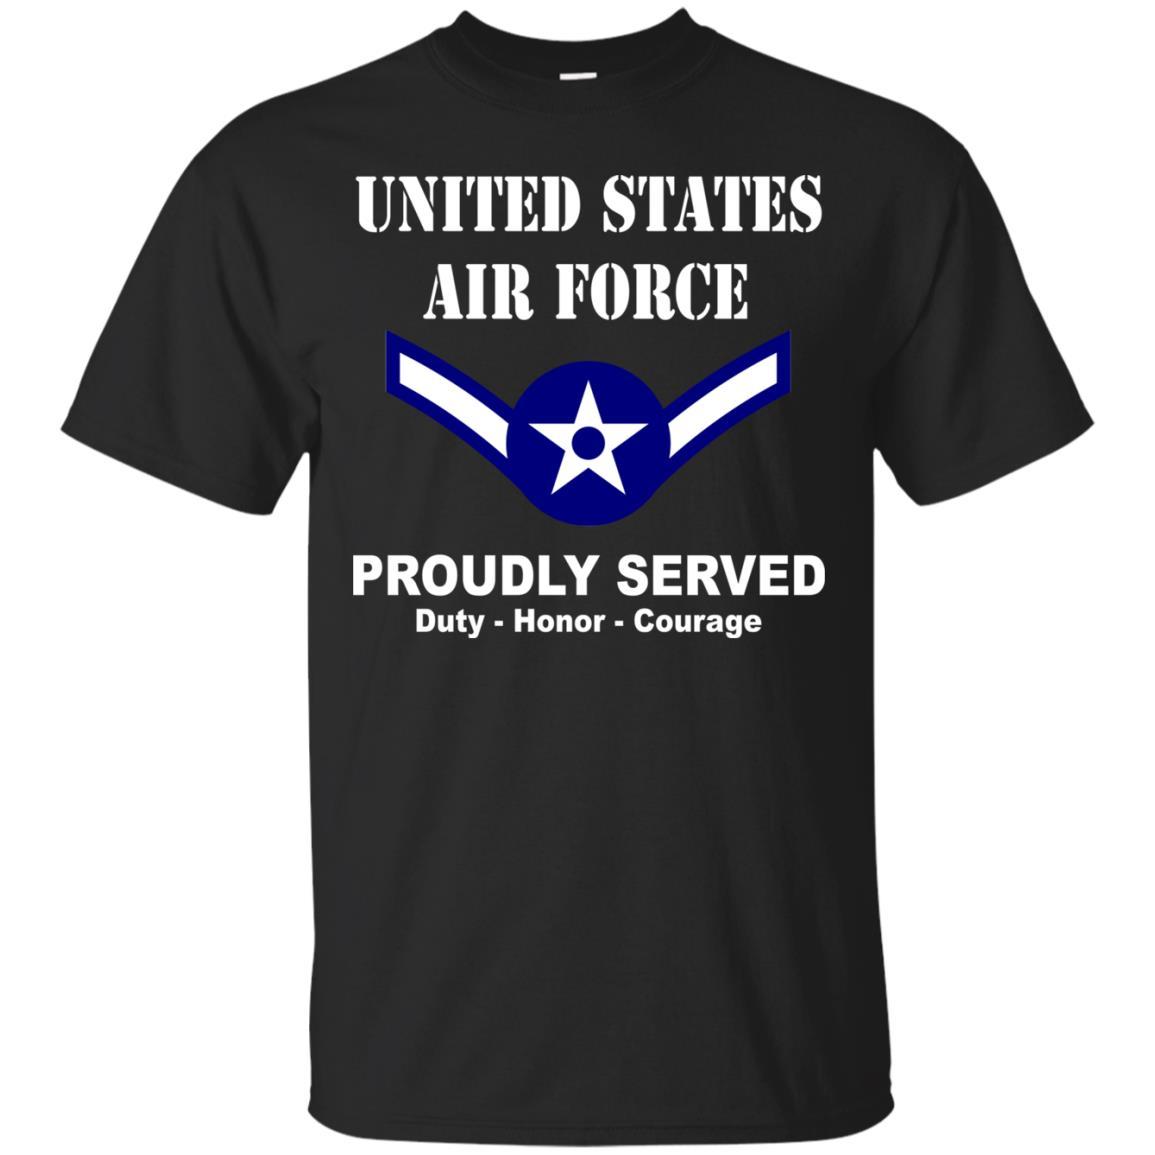 US Air Force E-2 Airman Amn E2 Ranks Enlisted Airman Men Front T Shirt For Air Force